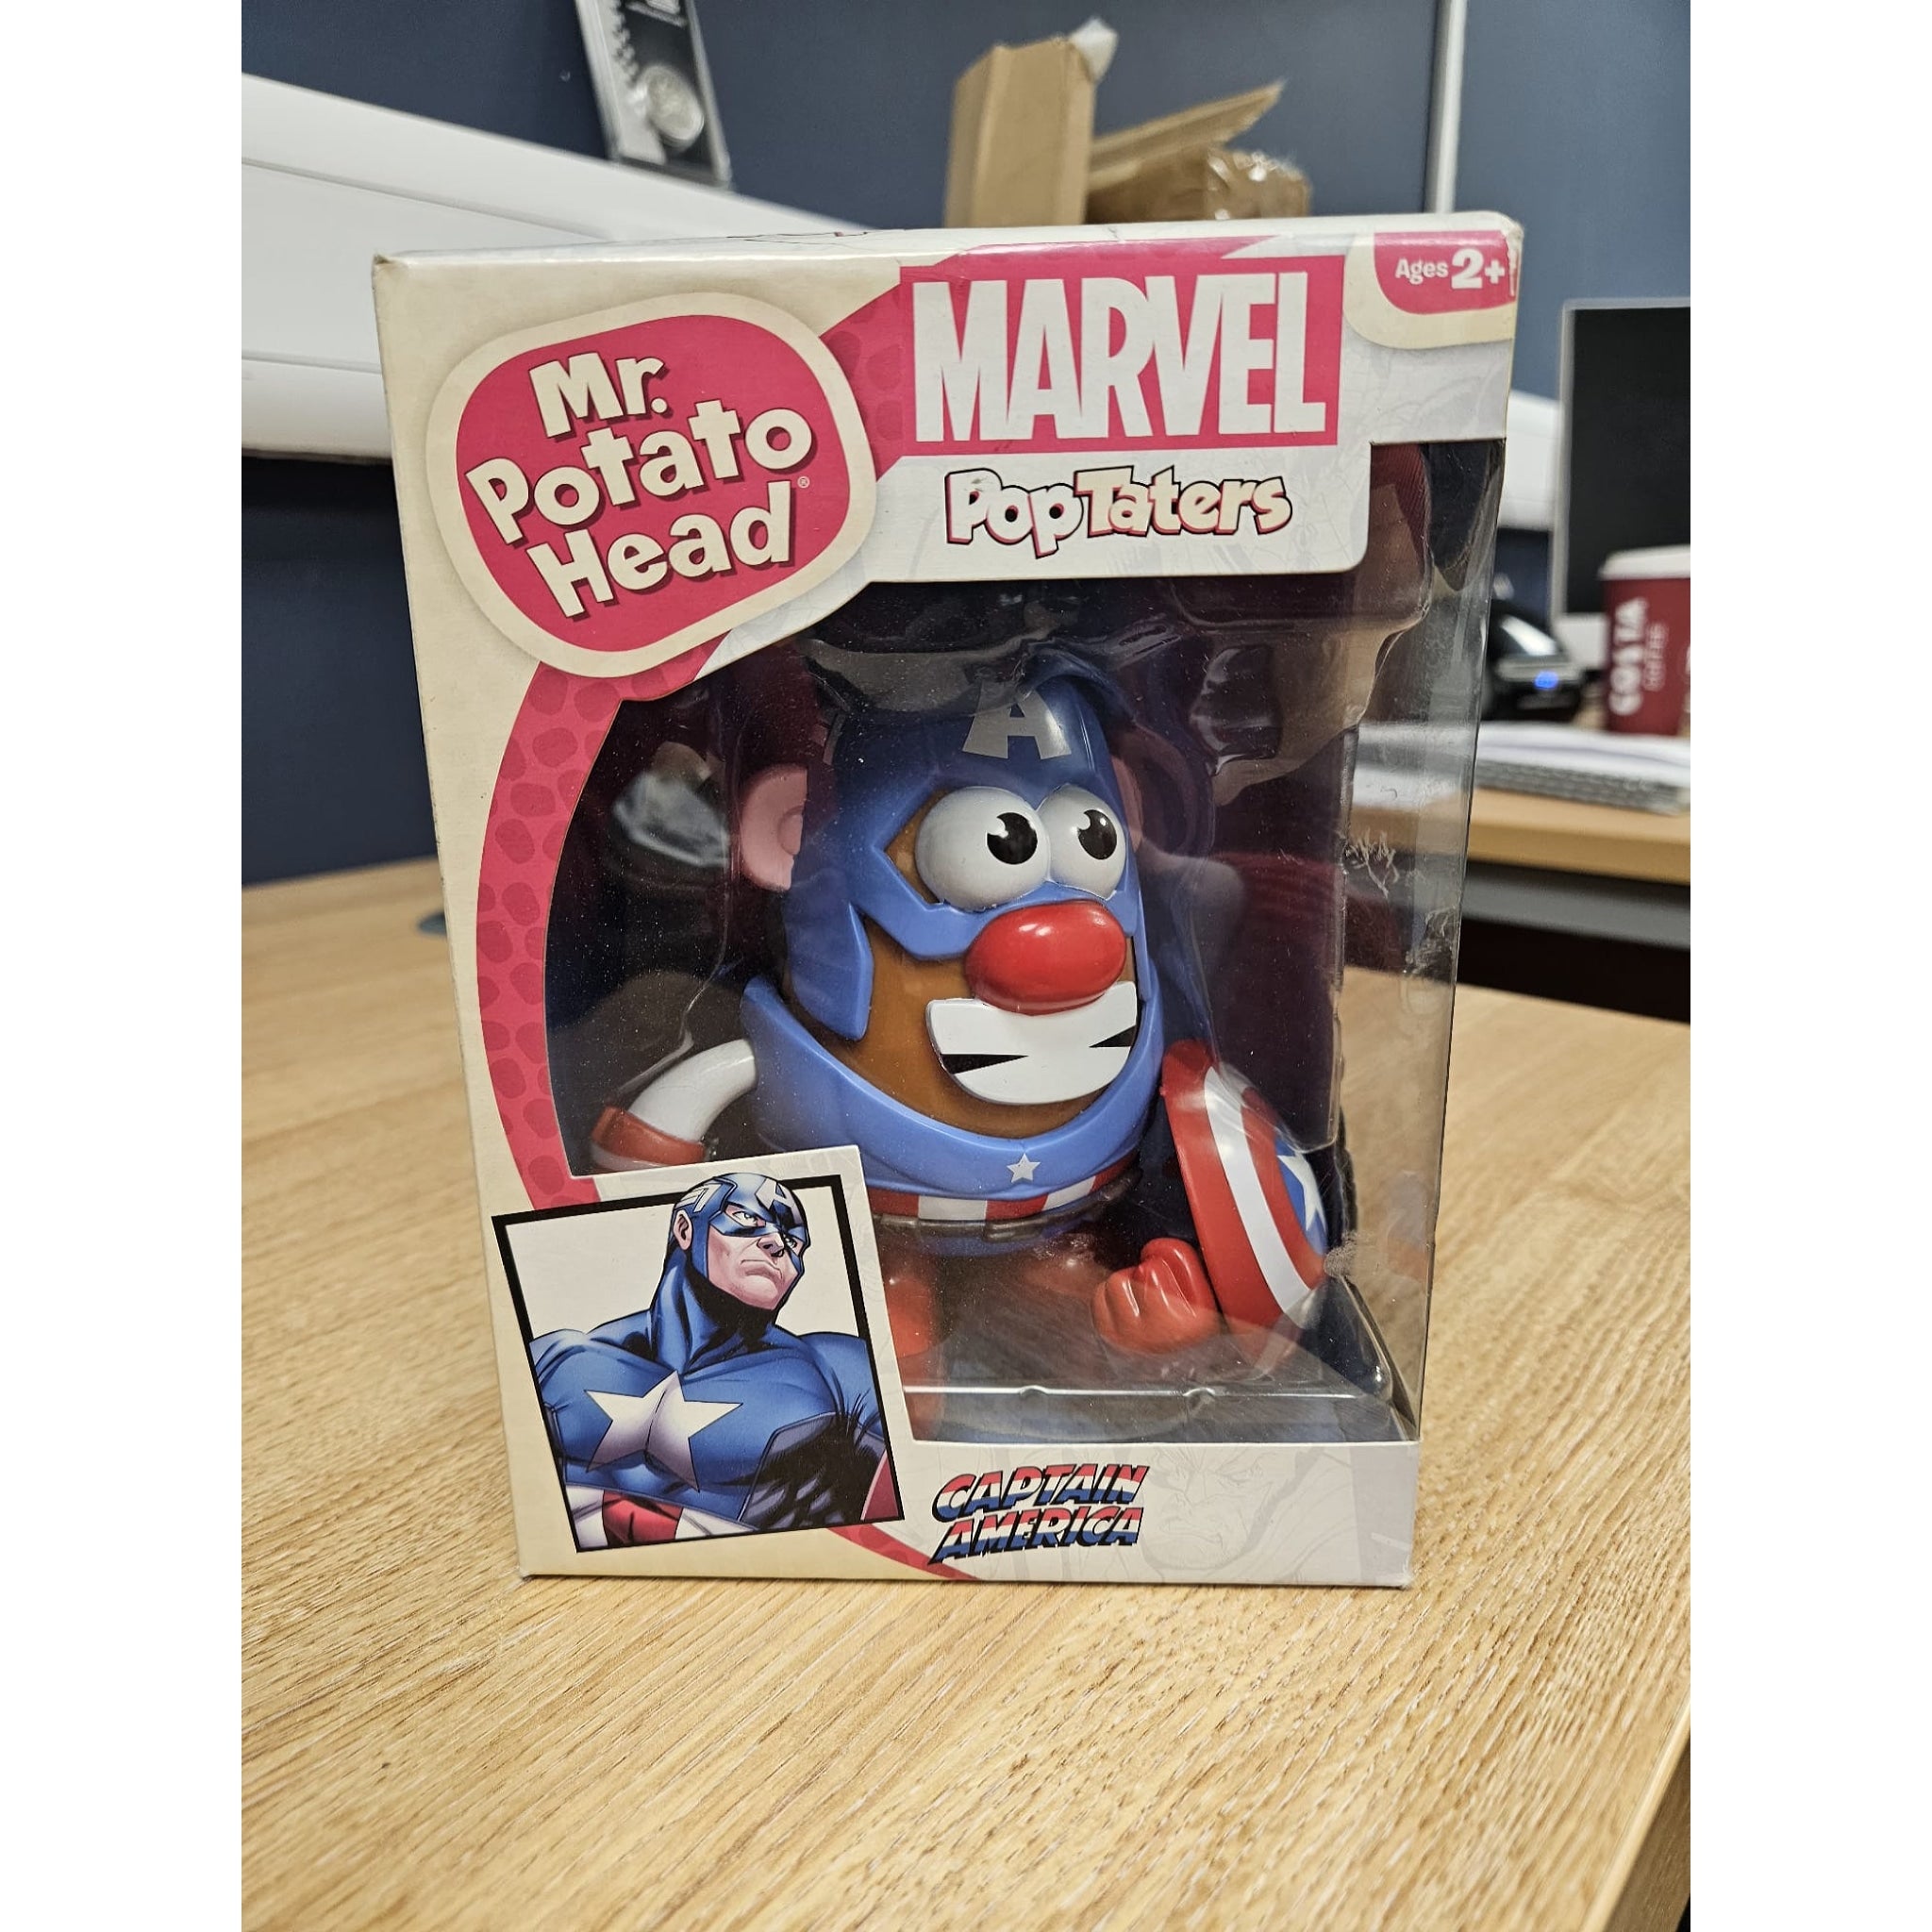 Mr. Potato Head Marvel Captain America Pop Taters DAMAGED BOX